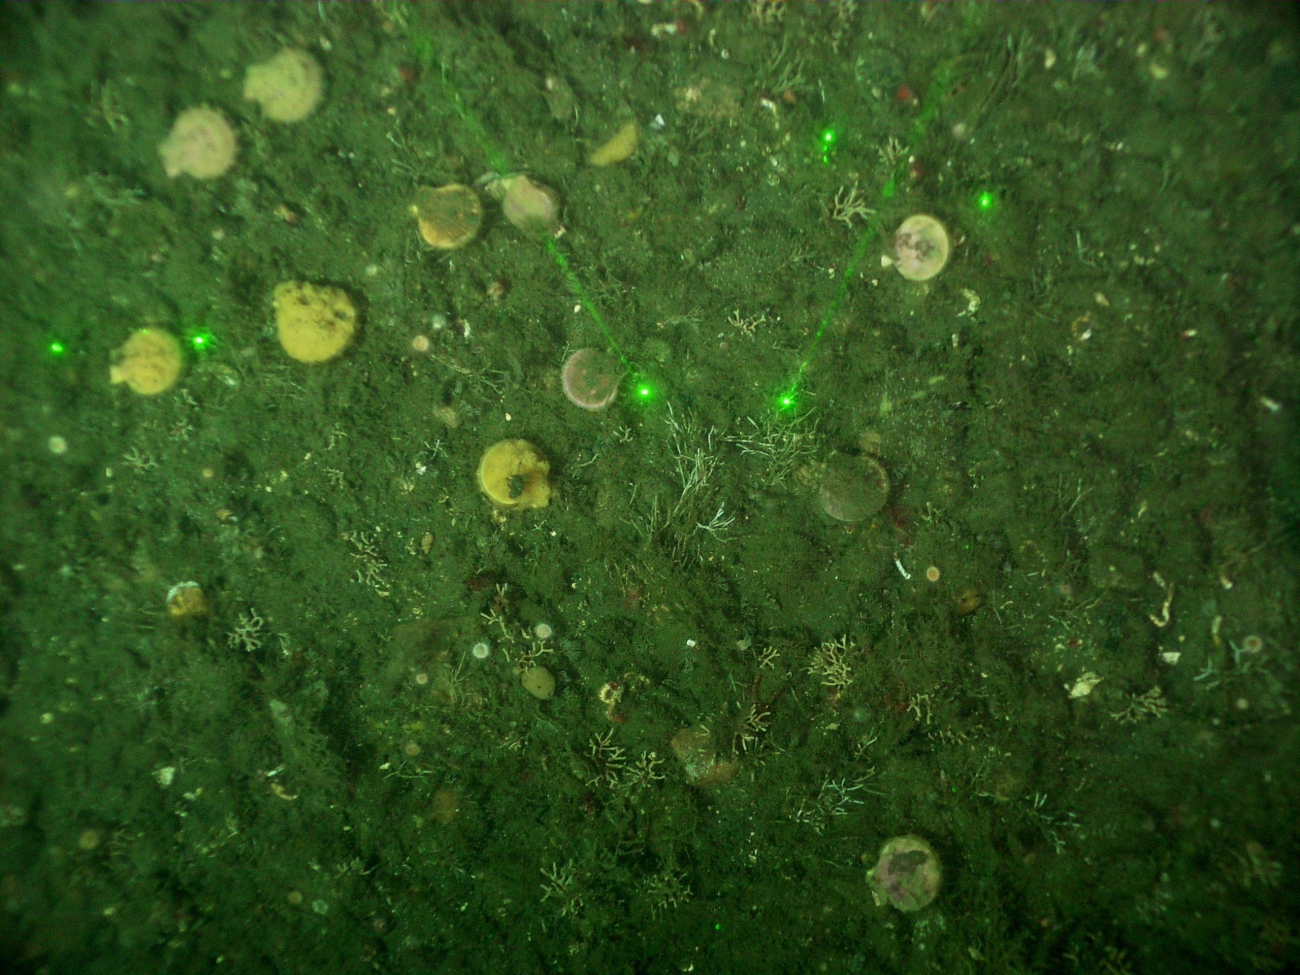 Deep sea scallops